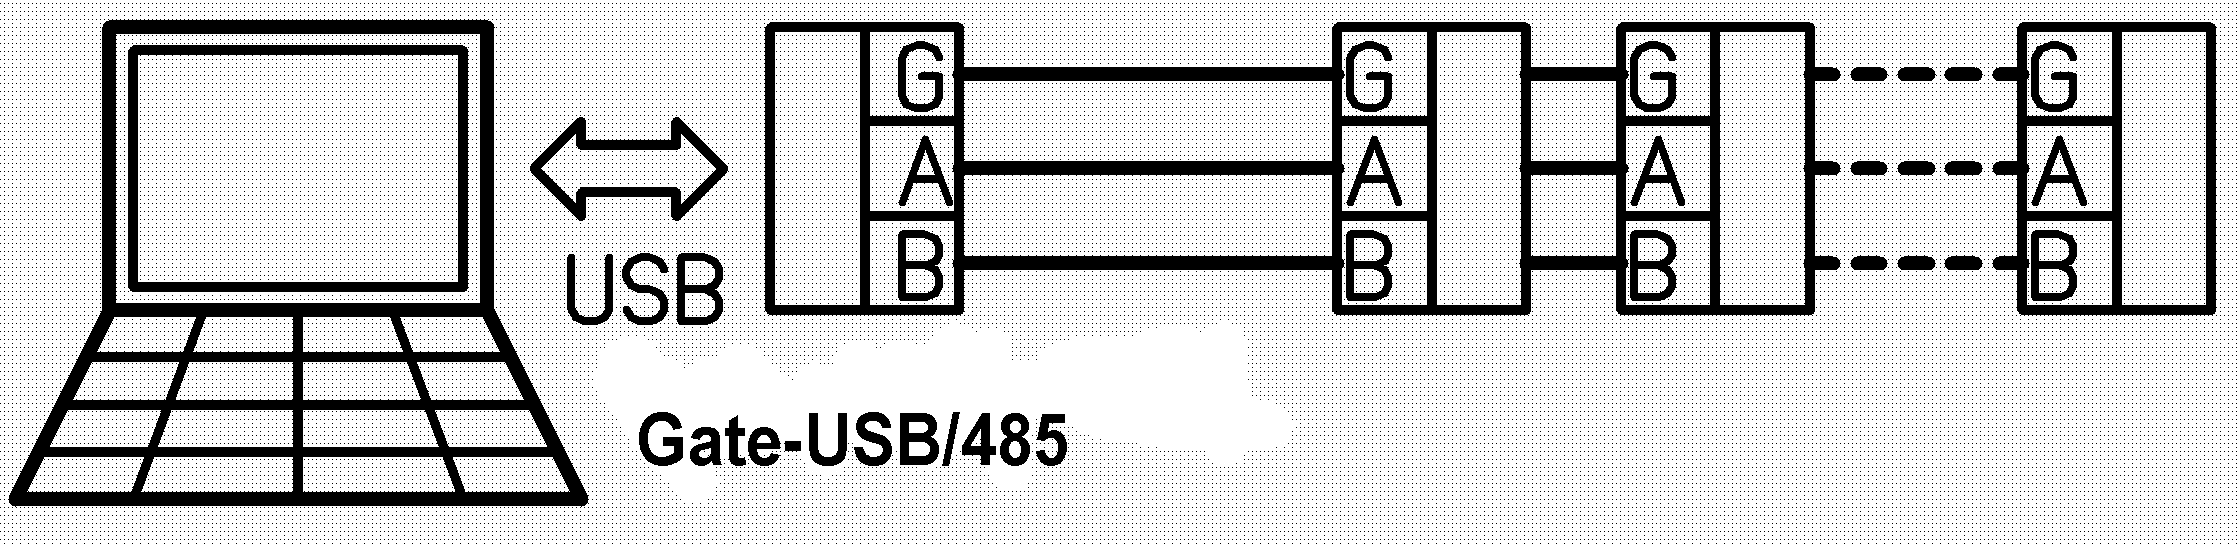 Схема подключения преобразователя Gate-USB/485